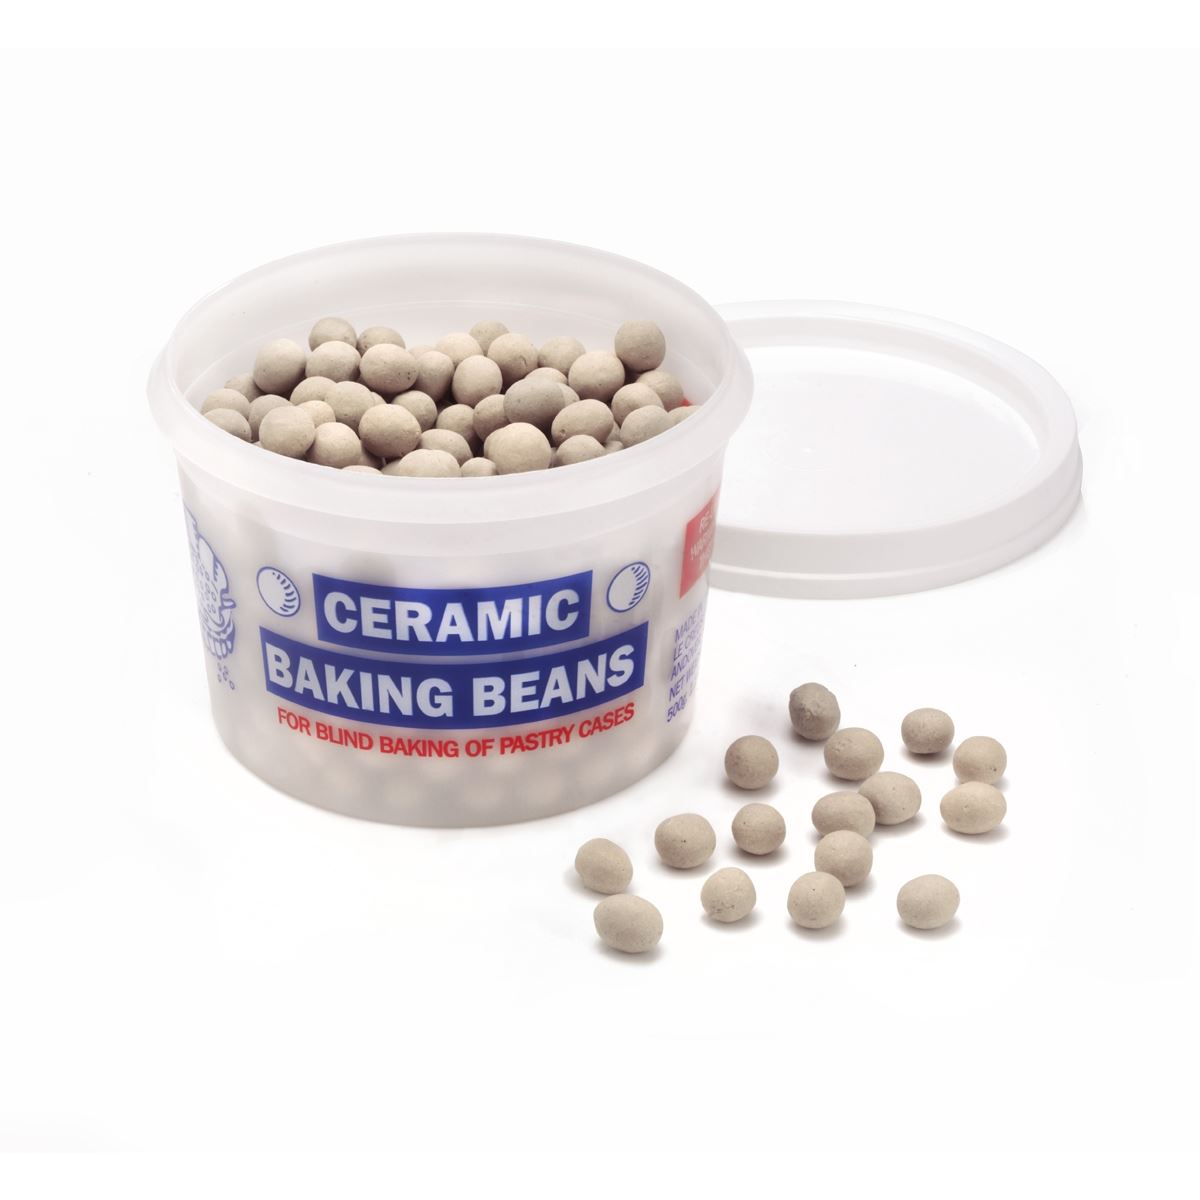 Le Creuset Ceramic Baking Beans Questions & Answers